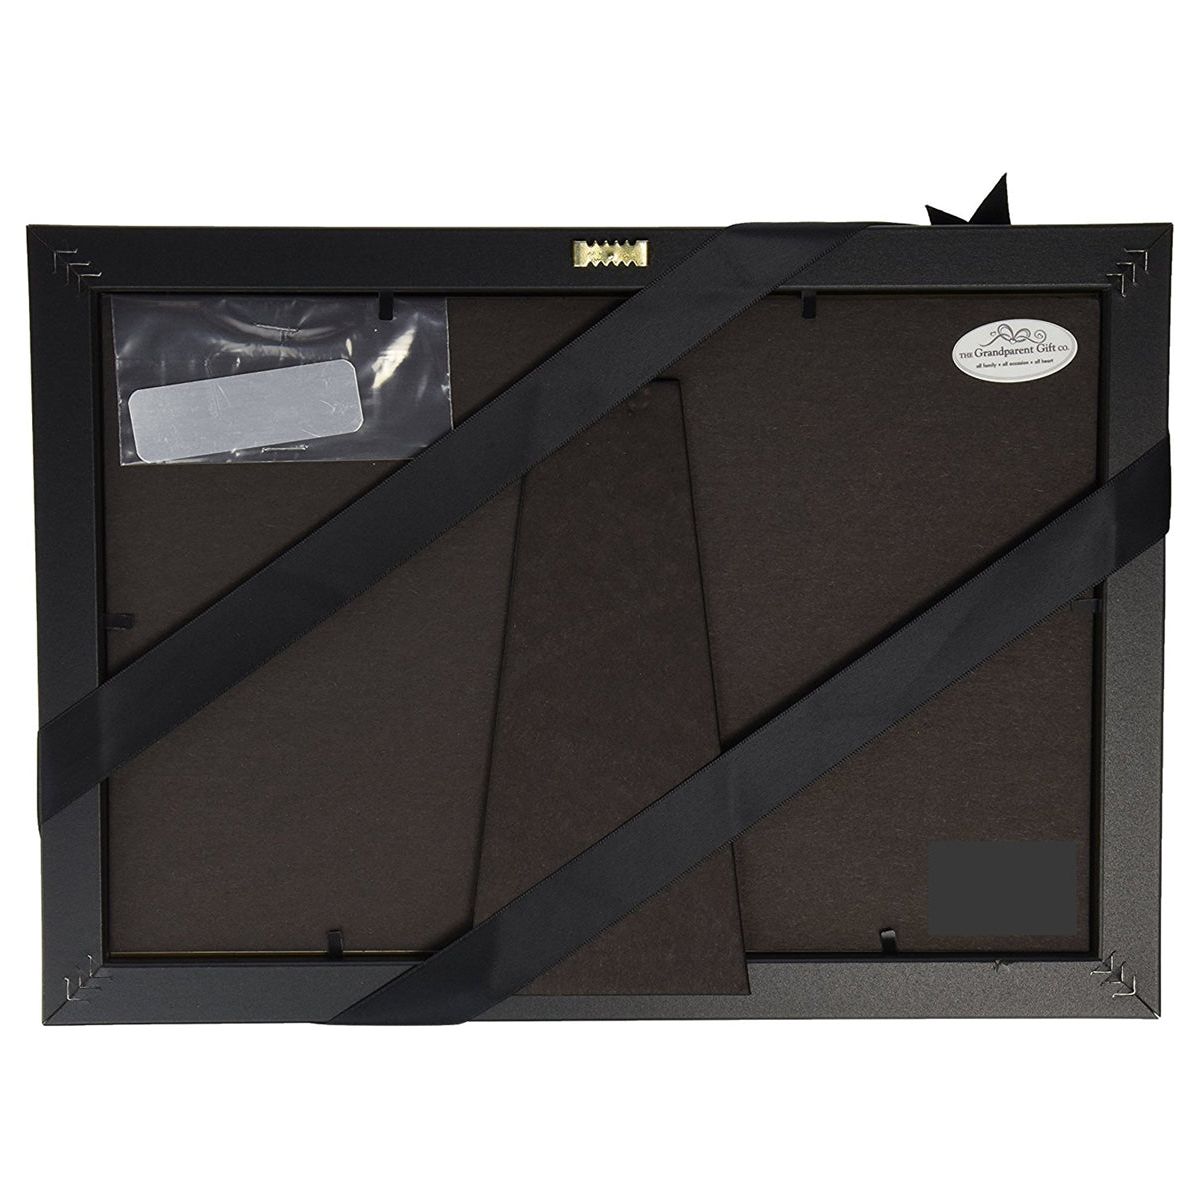 Back of frame showing easel back, sawtooth hanger, and optional engravable plaque.